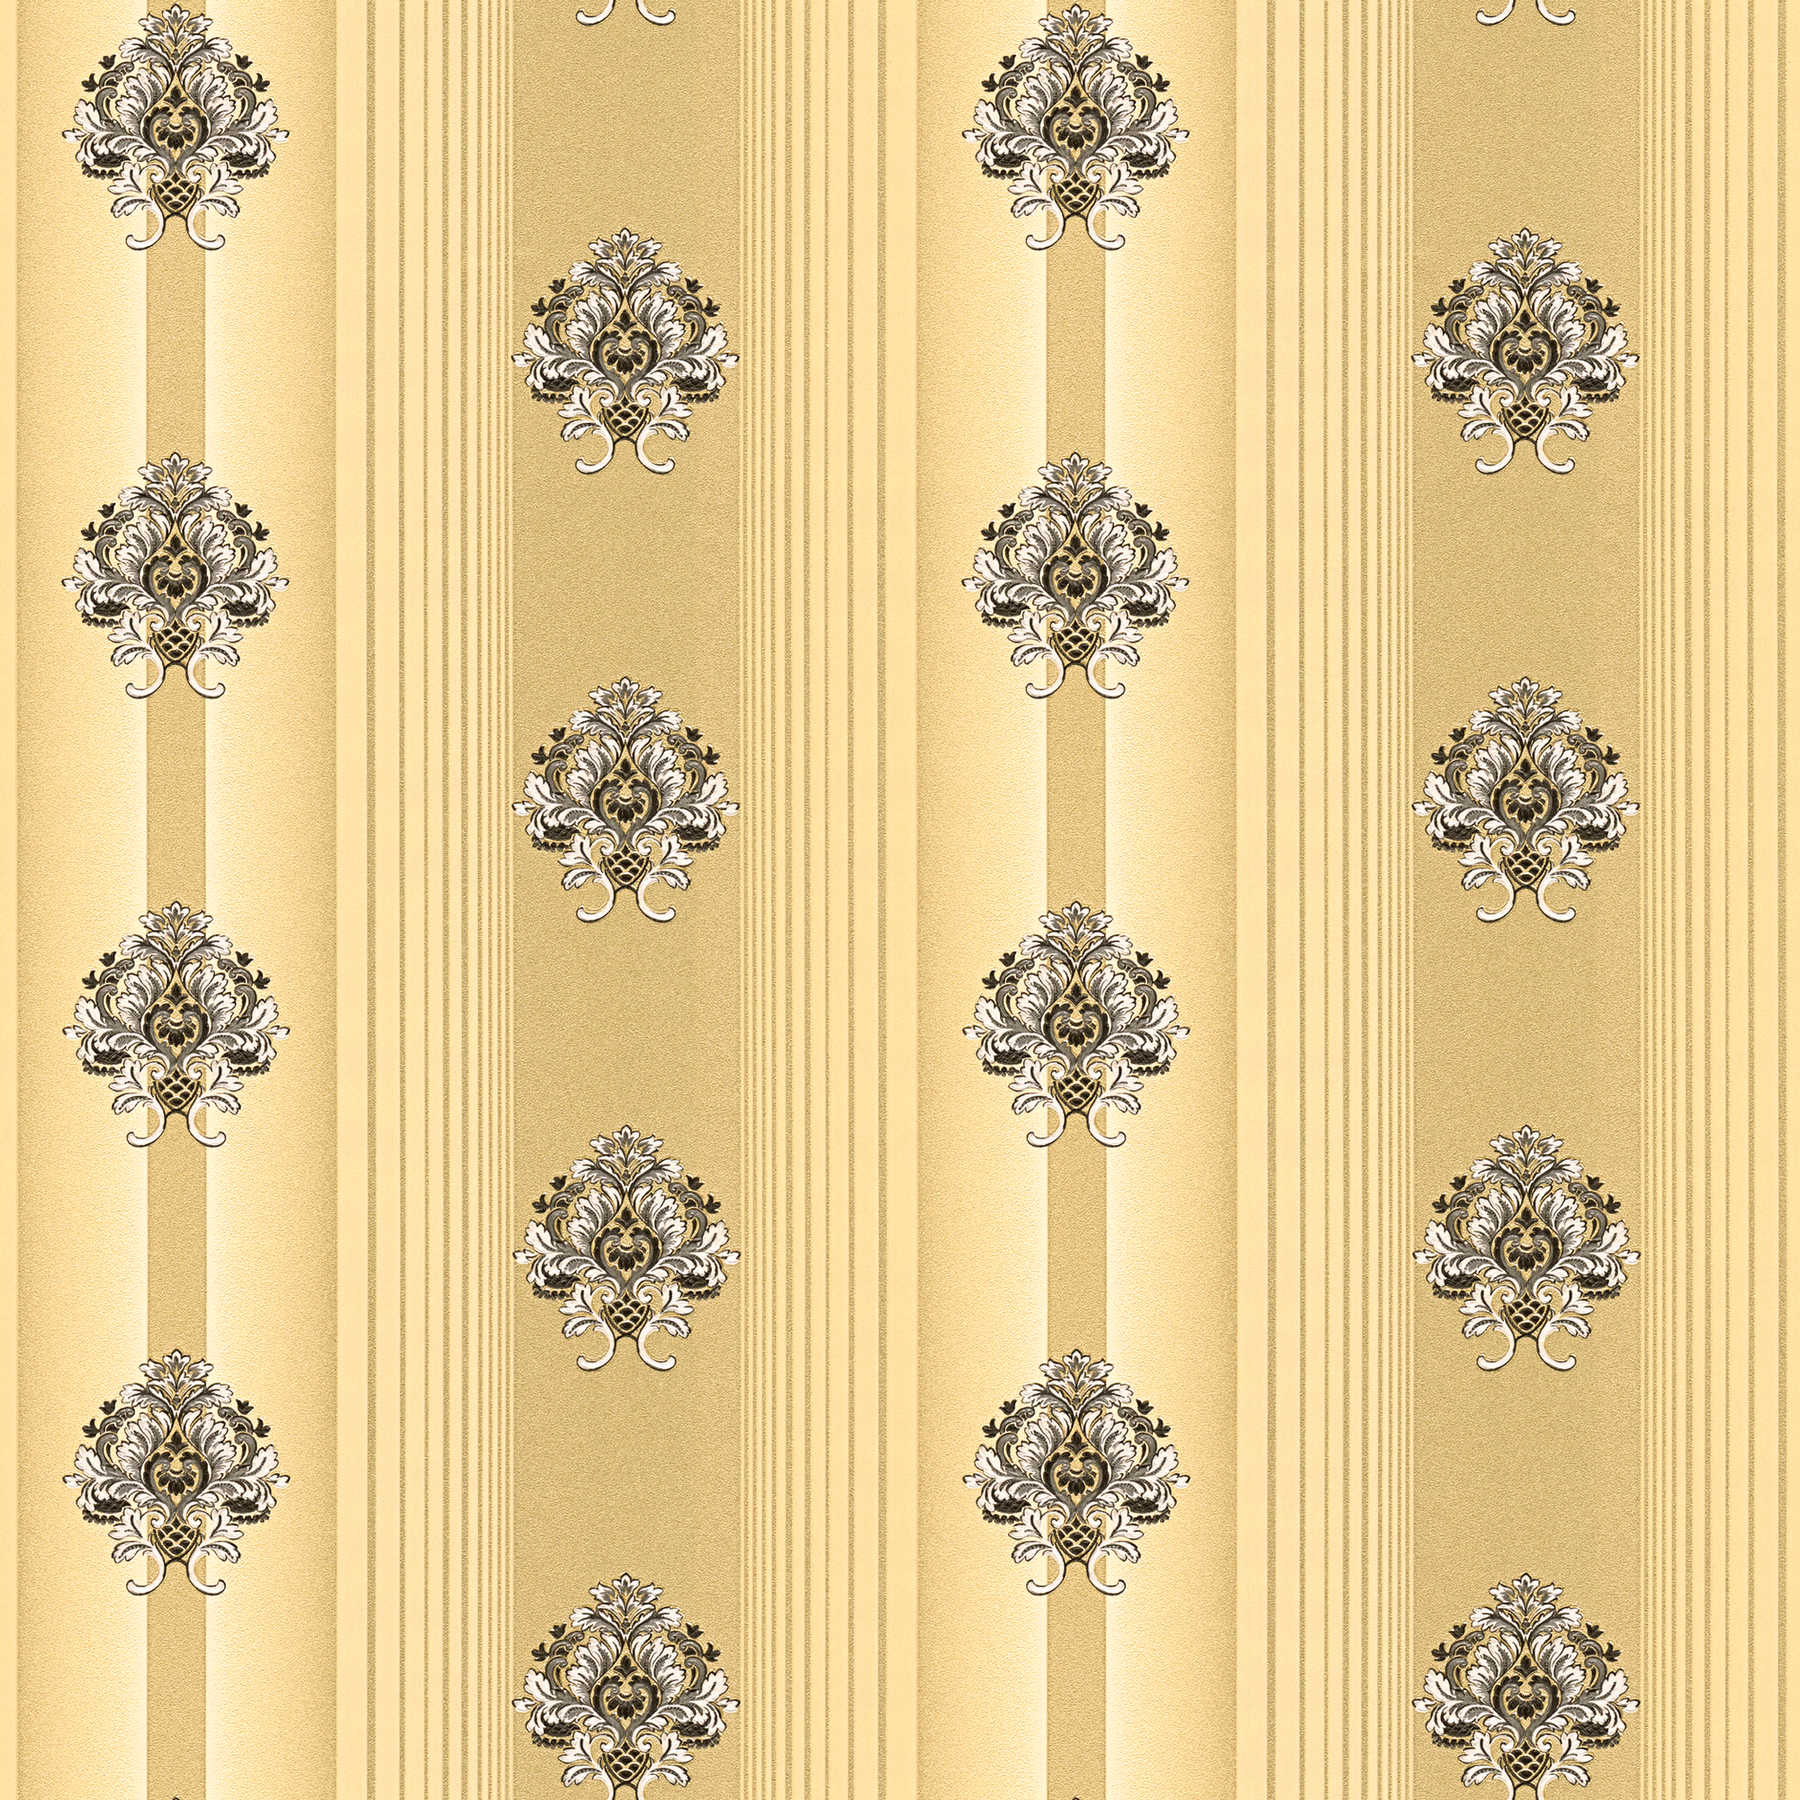 Classic wallpaper with ornament & stripe pattern - brown, metallic
